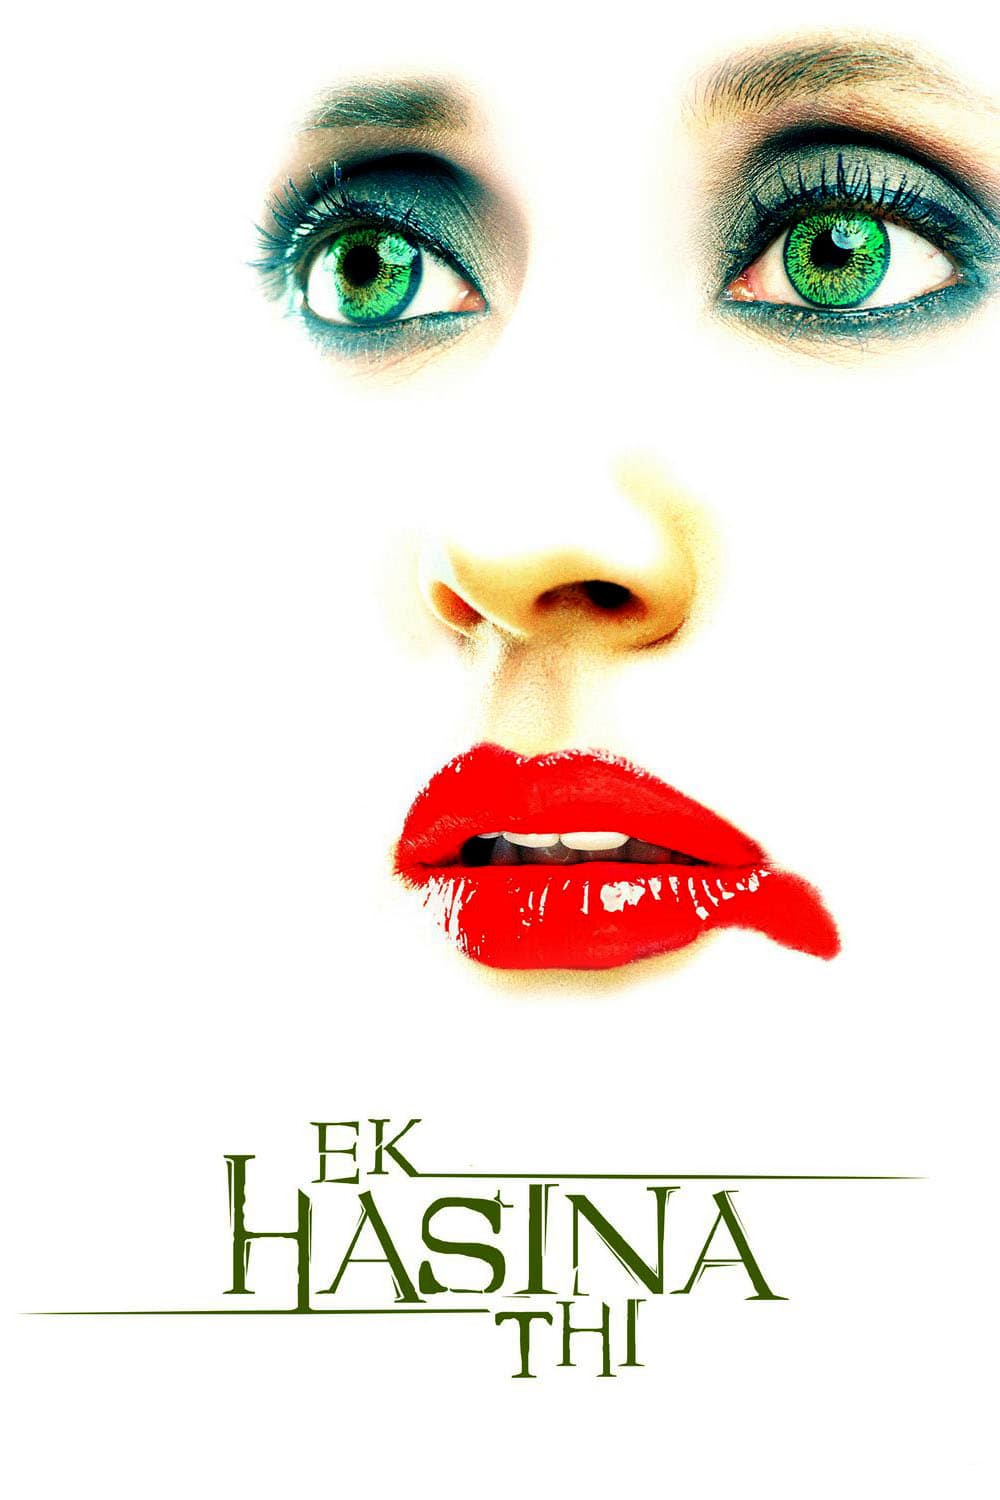 Poster for the movie "Ek Hasina Thi"